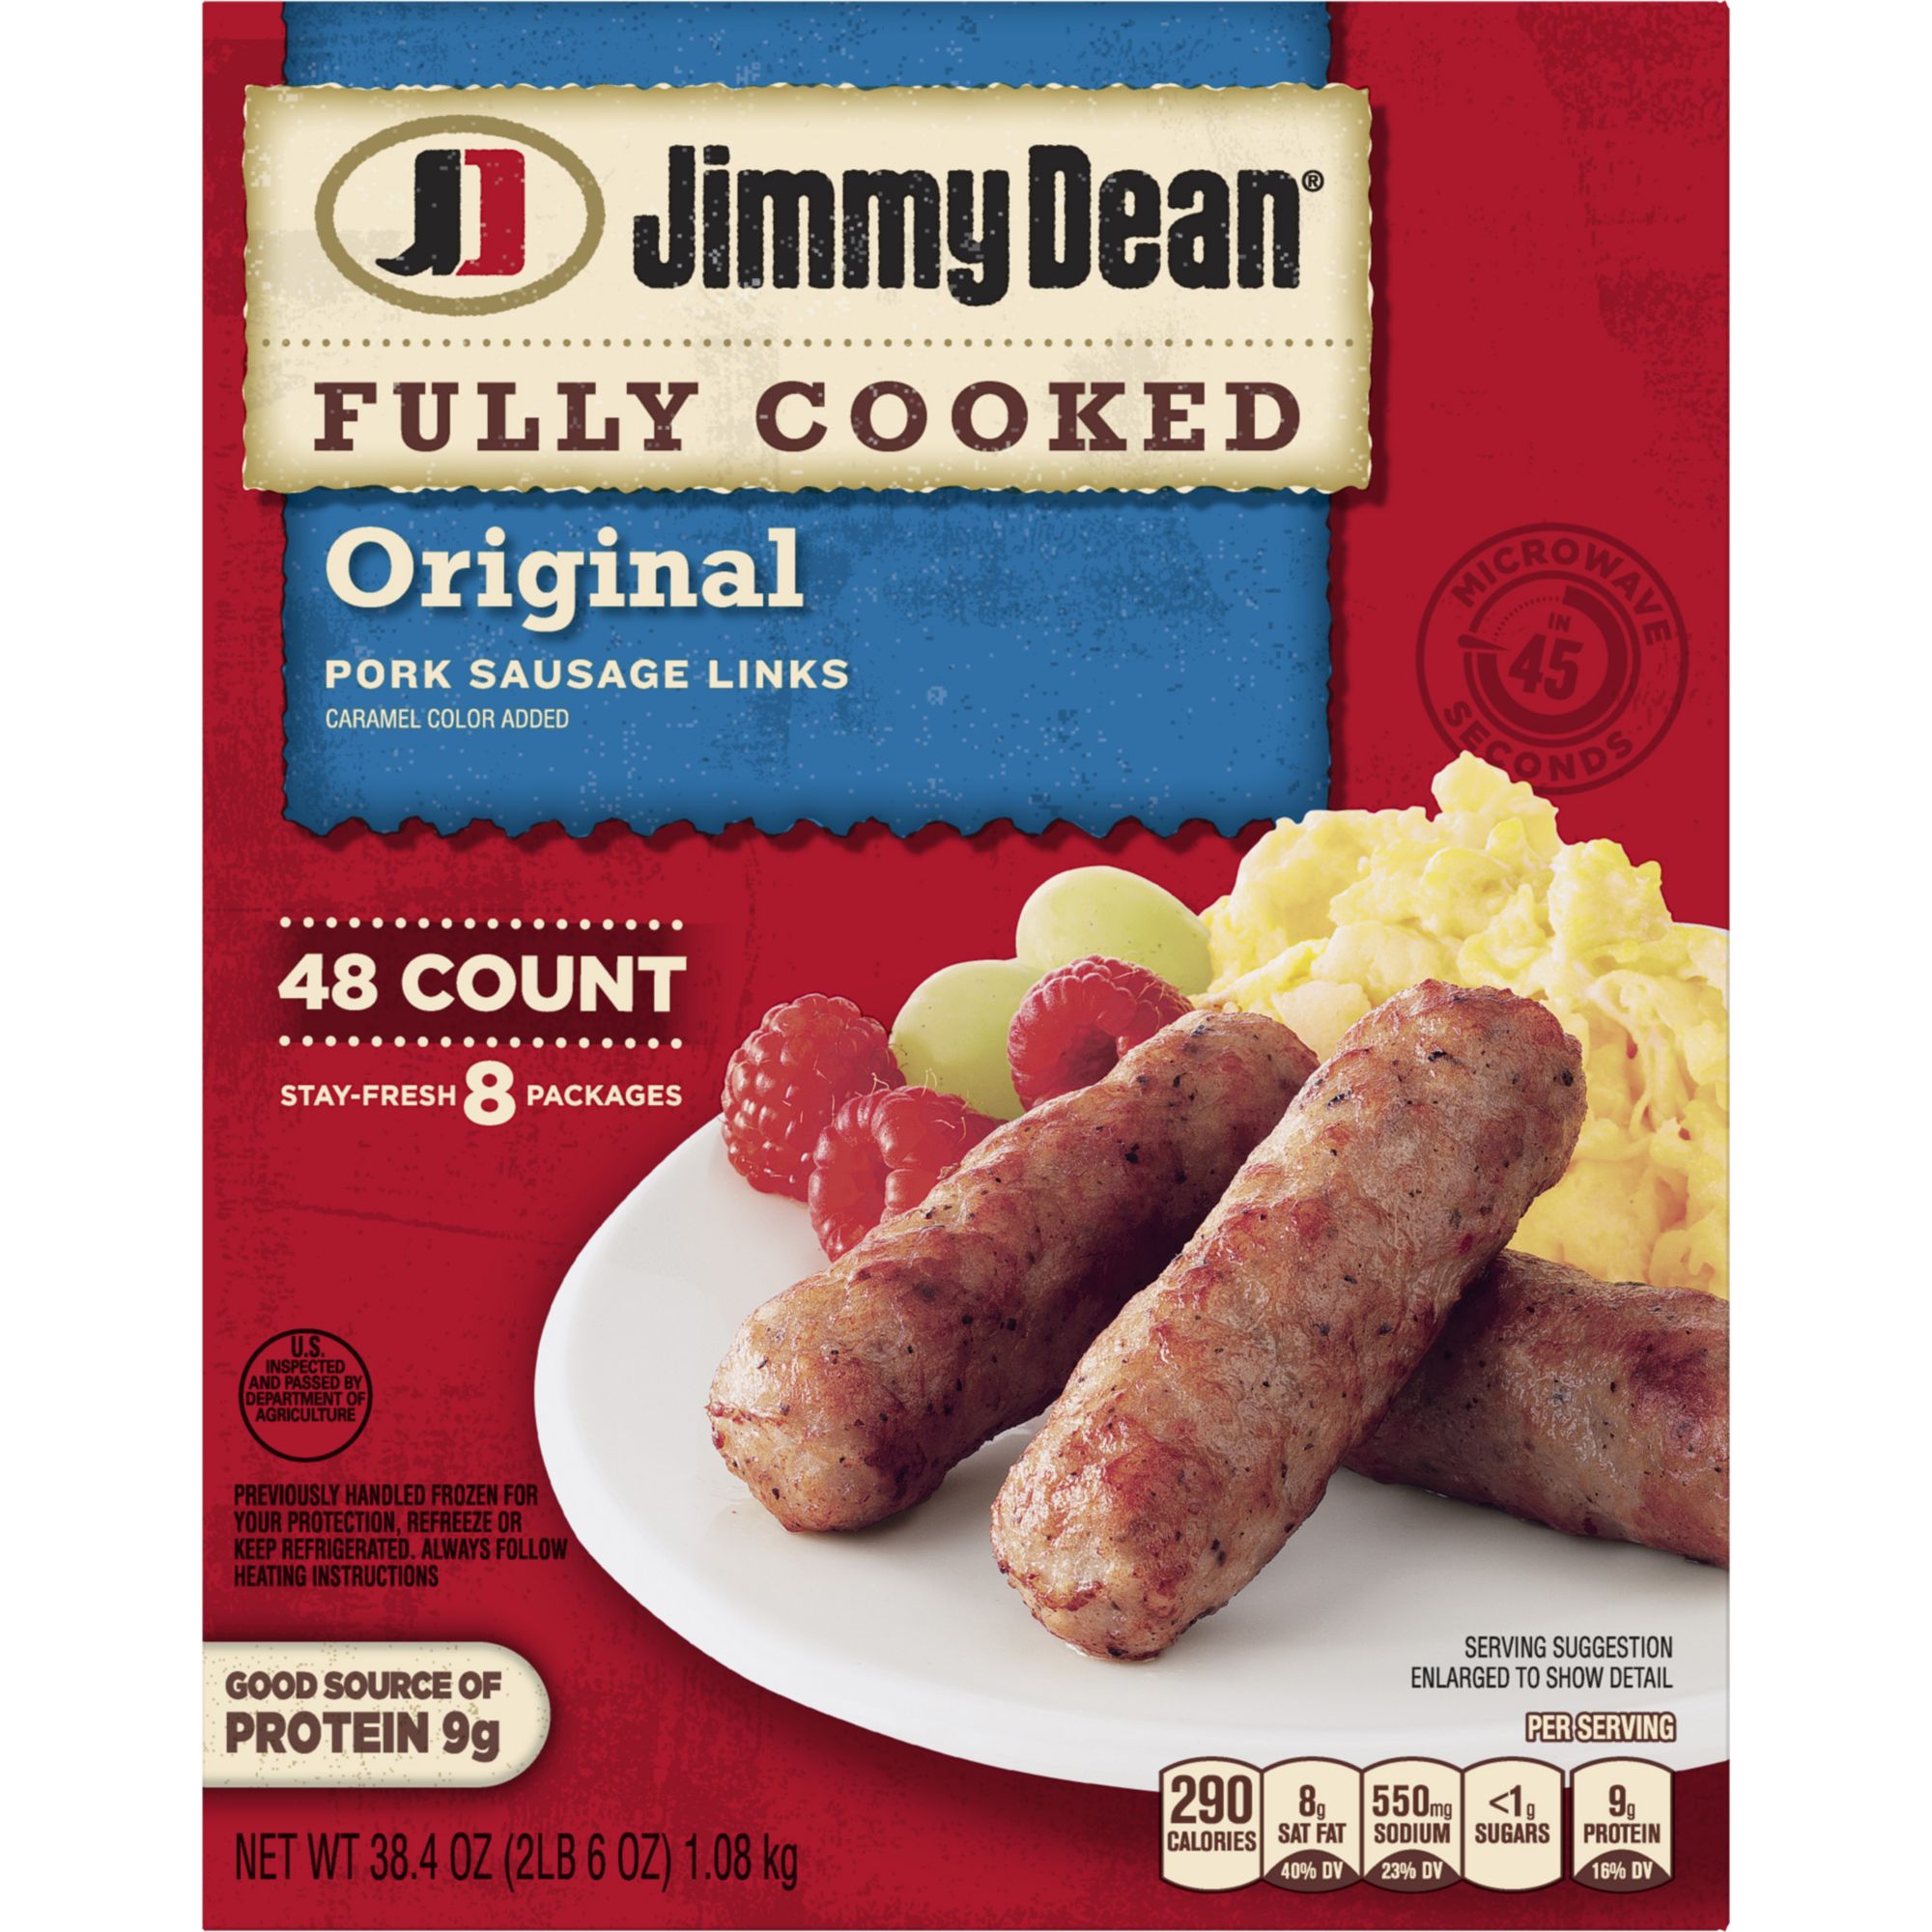 Jimmy Dean Fully Cooked Original Pork Sausage Links, 48 ct.